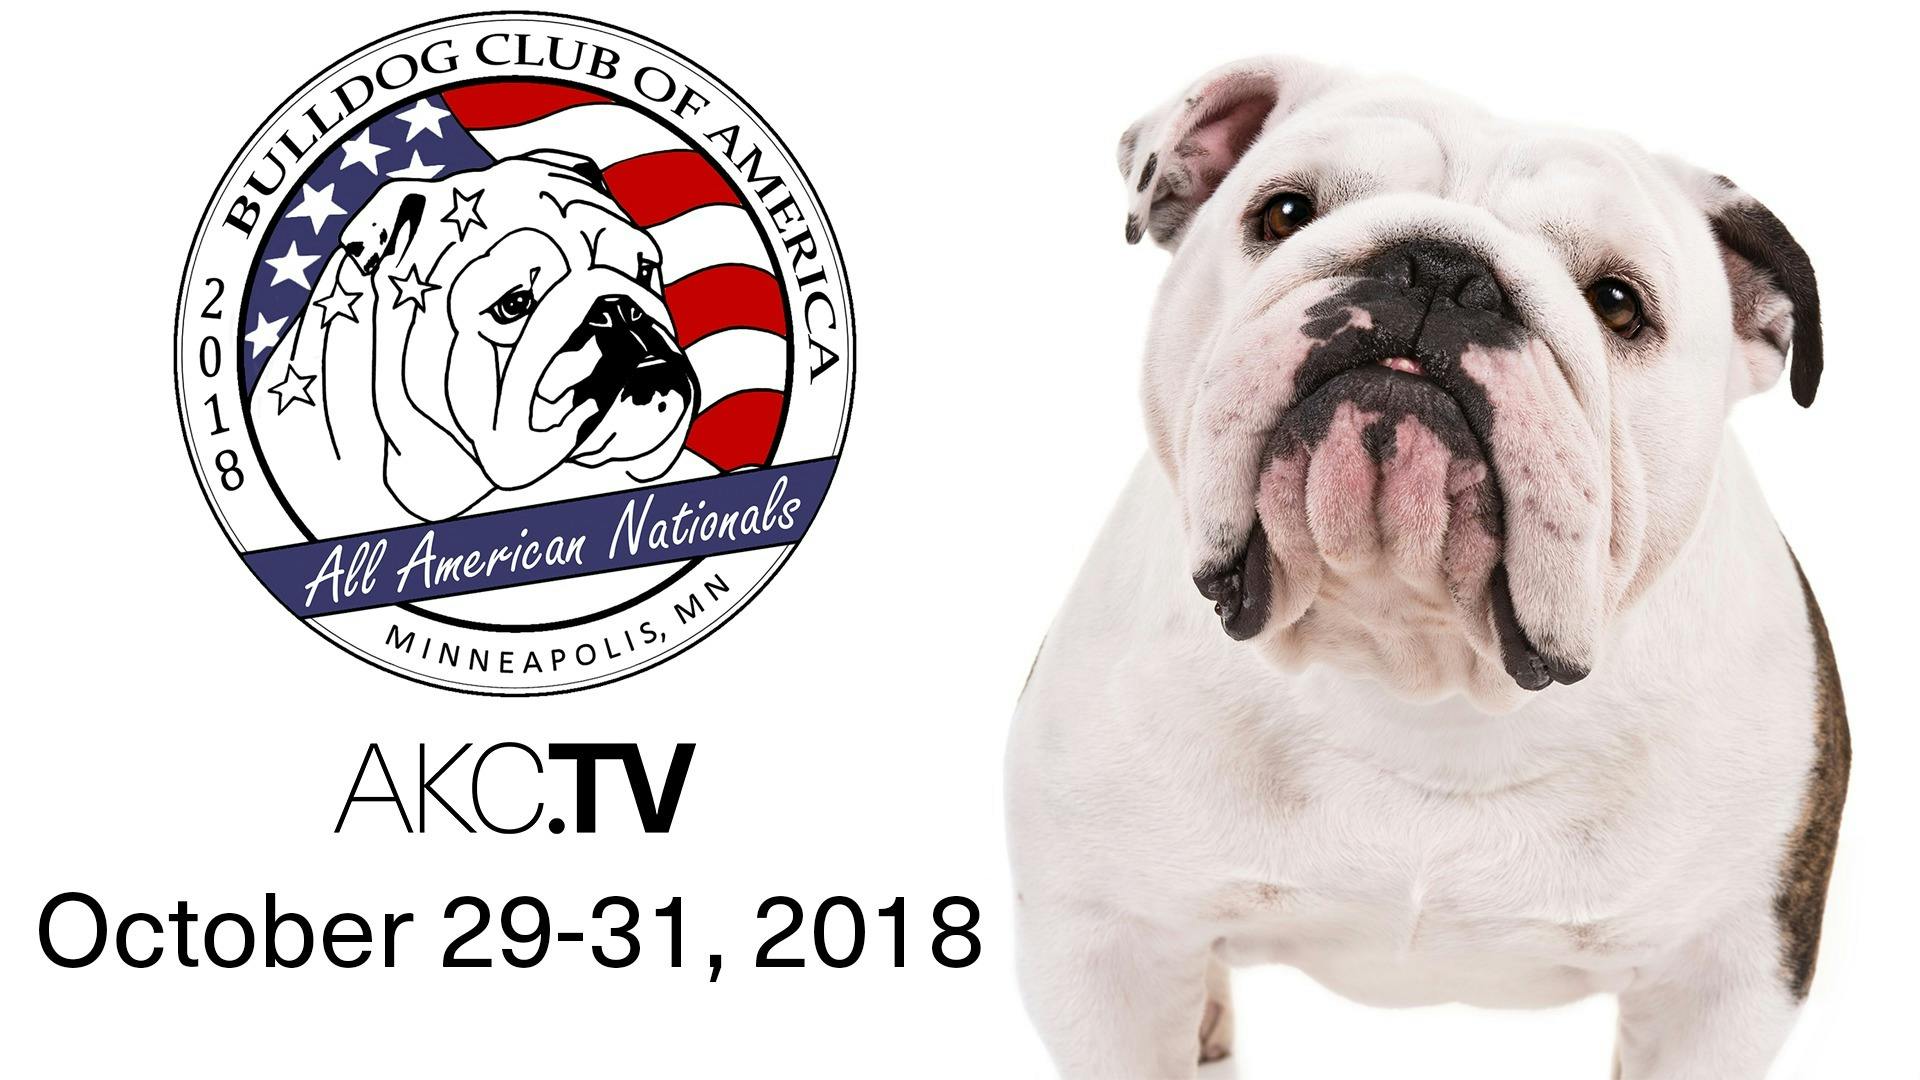 AKC.TV Bulldog Club of America National Specialty 2018